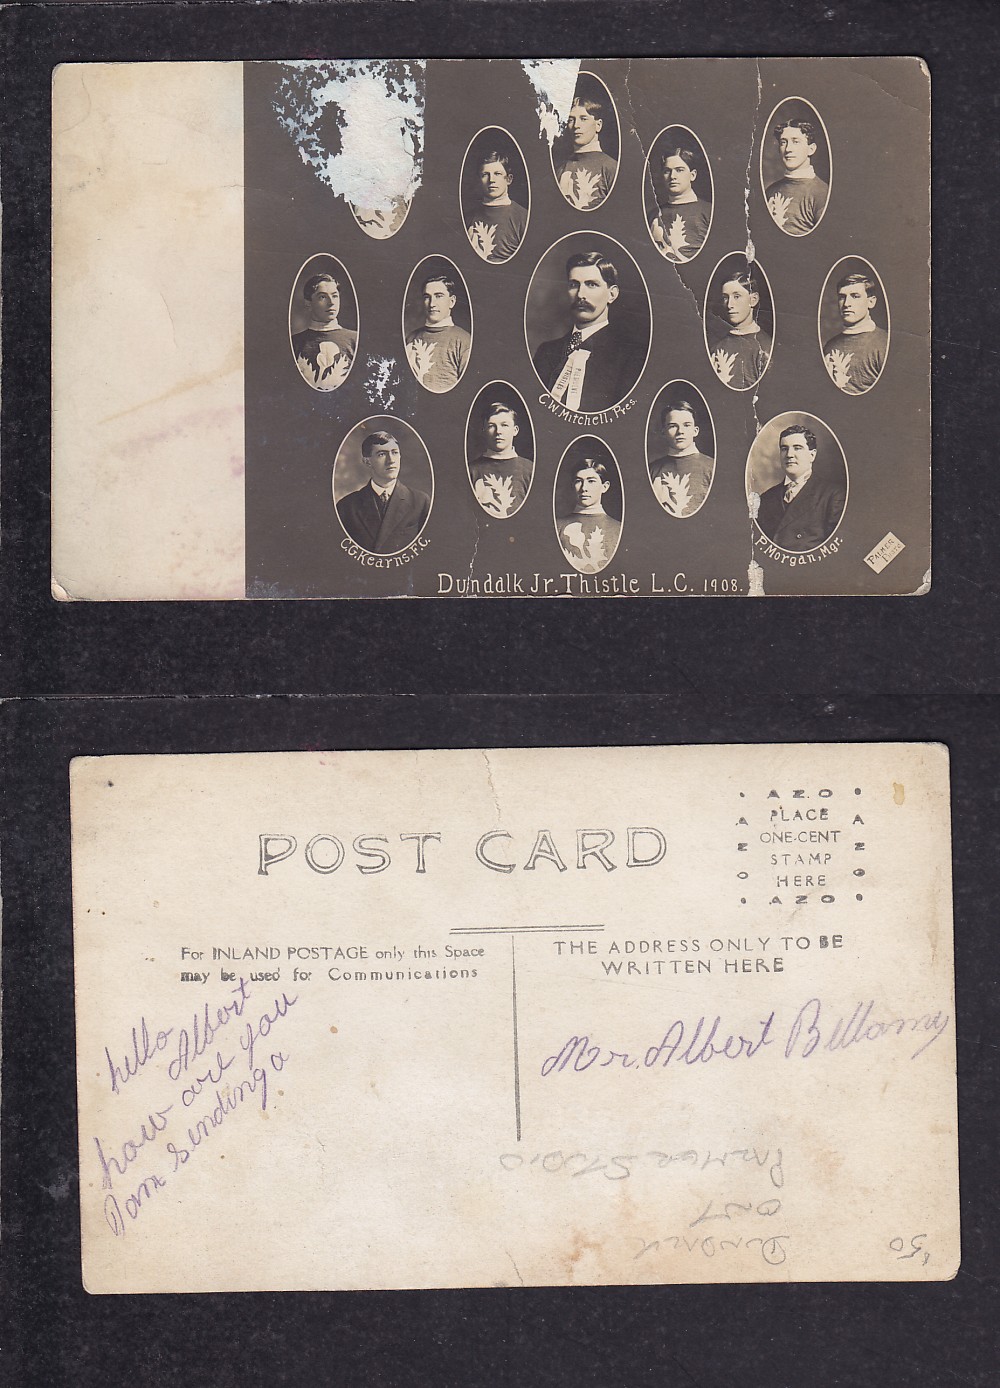 1908 DUNDDLK  JR. THISTLE HOCKEY TEAM POST CARD photo